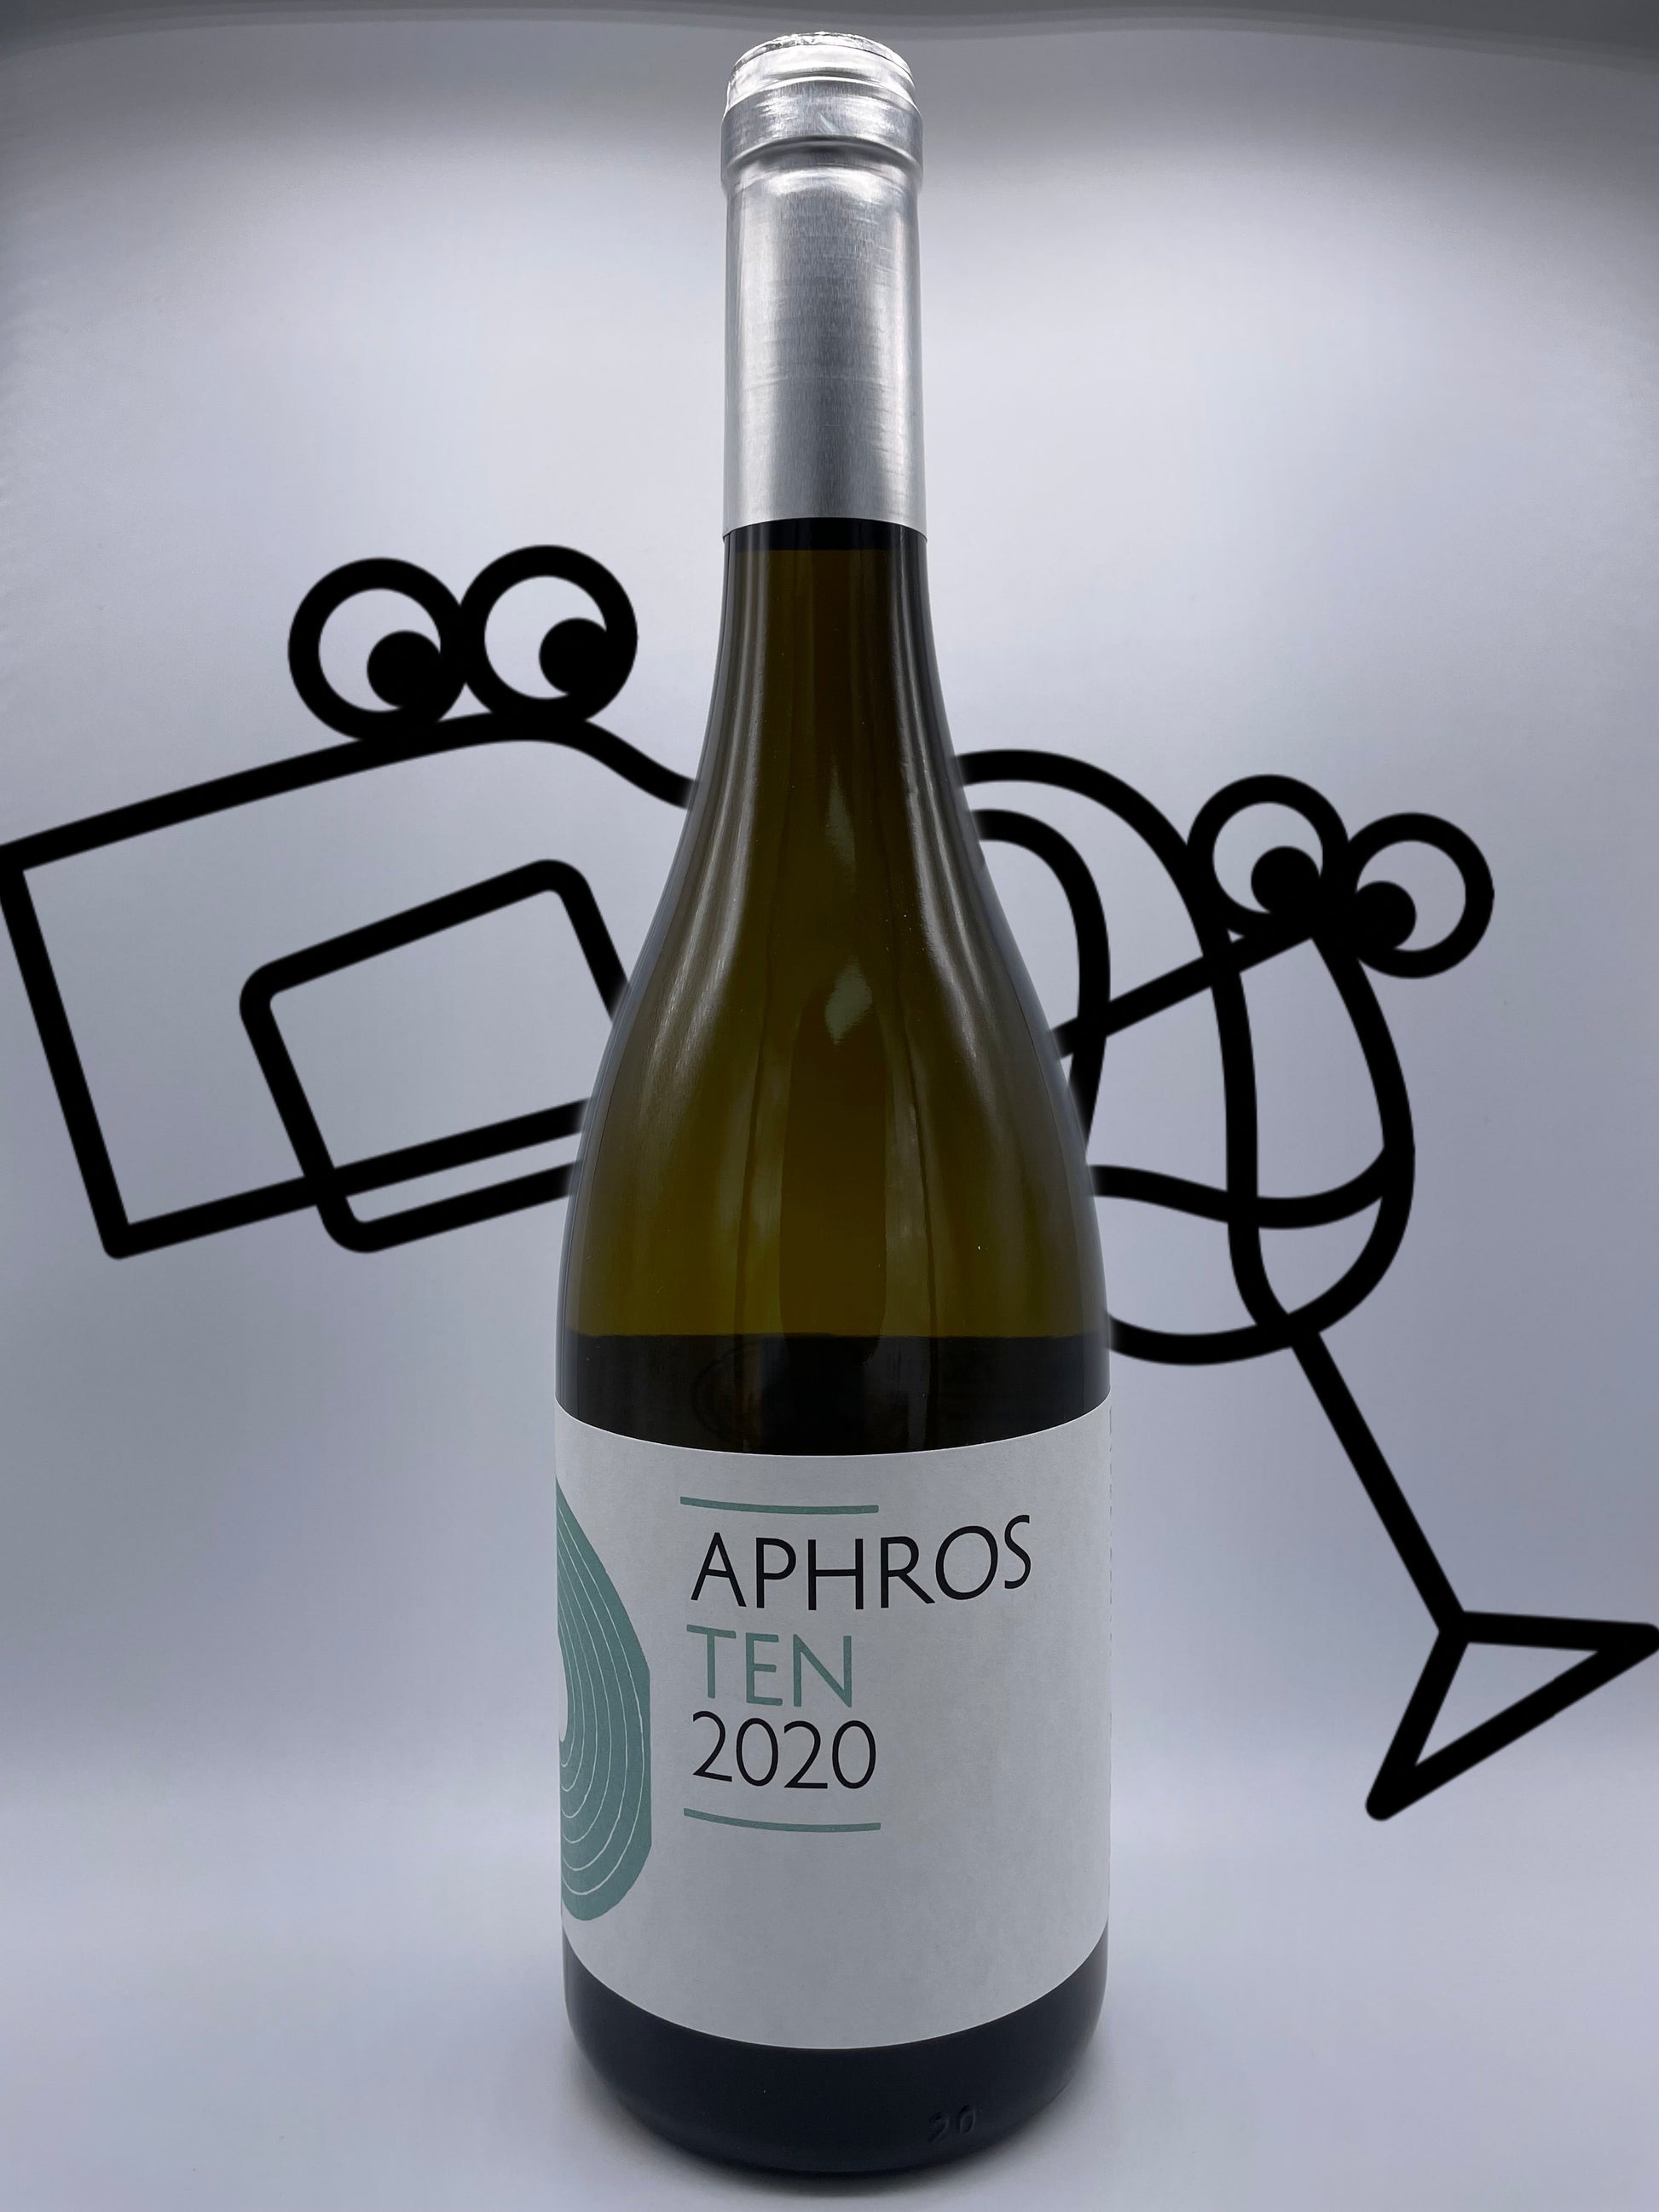 Aphros 'Ten' Loureiro Vinho Verde, Portugal Williston Park Wines